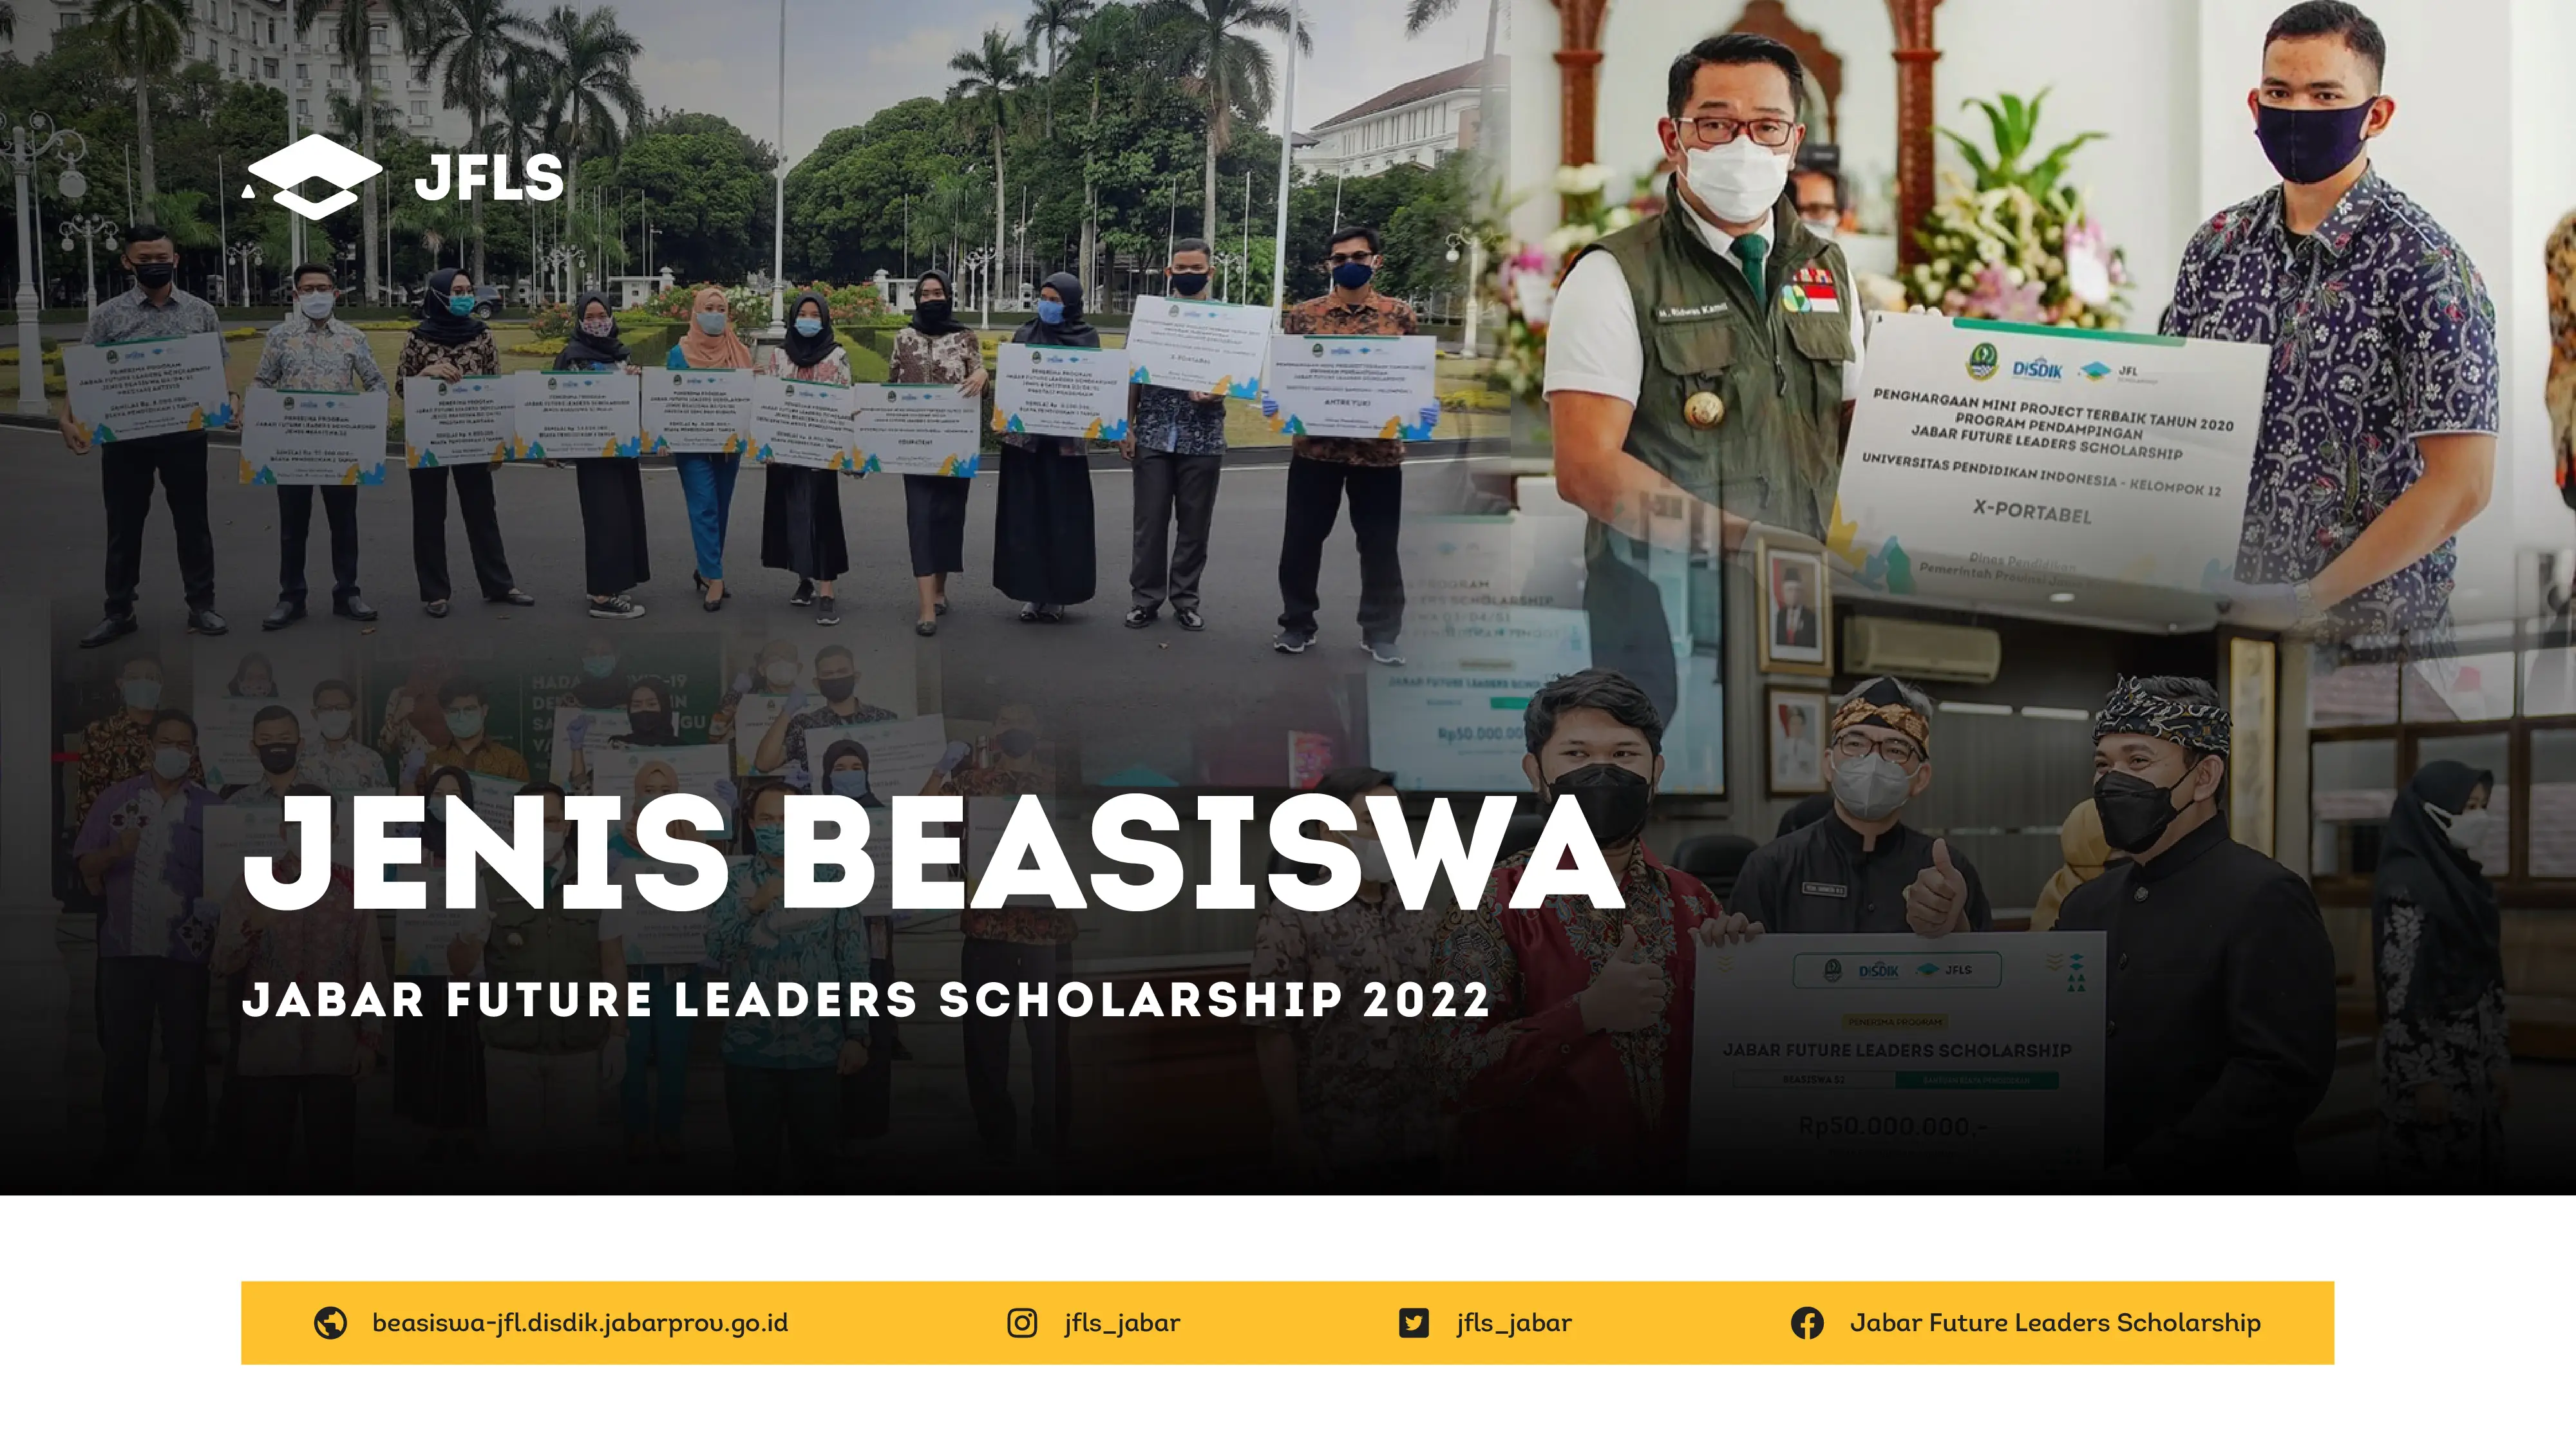 Jenis Beasiswa - Jabar Future Leaders Scholarship